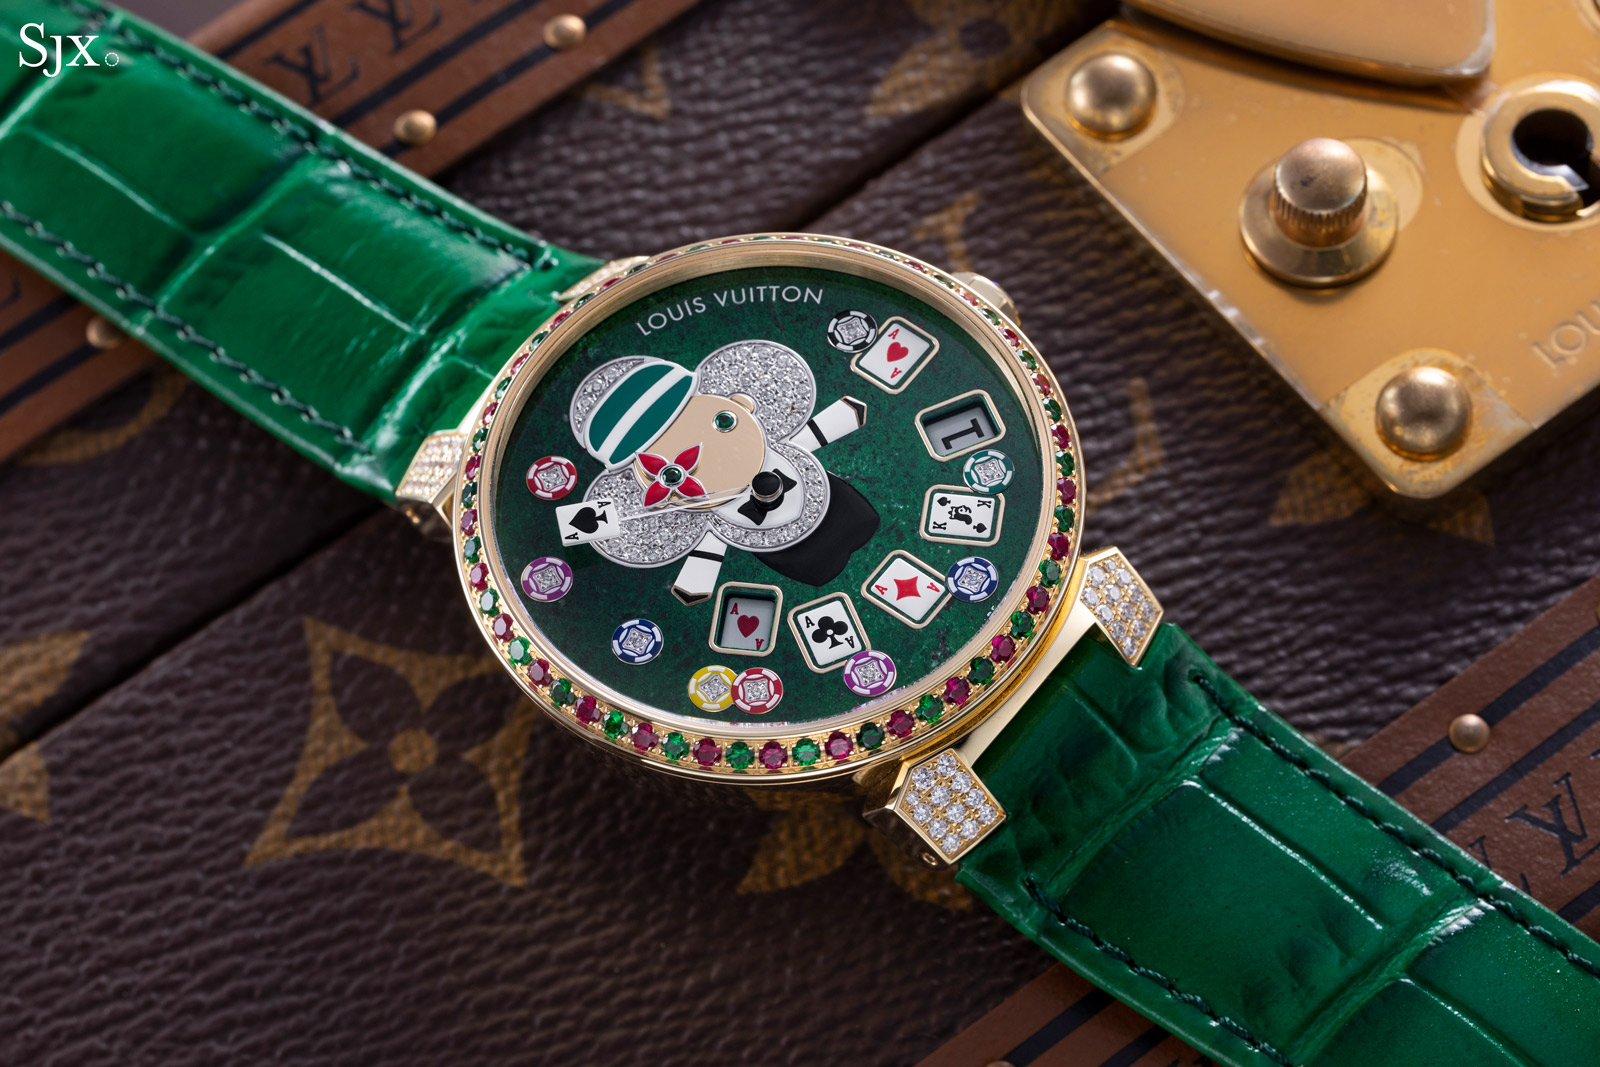 Louis Vuitton tambour horizon diamond Smart Watch Limited Production